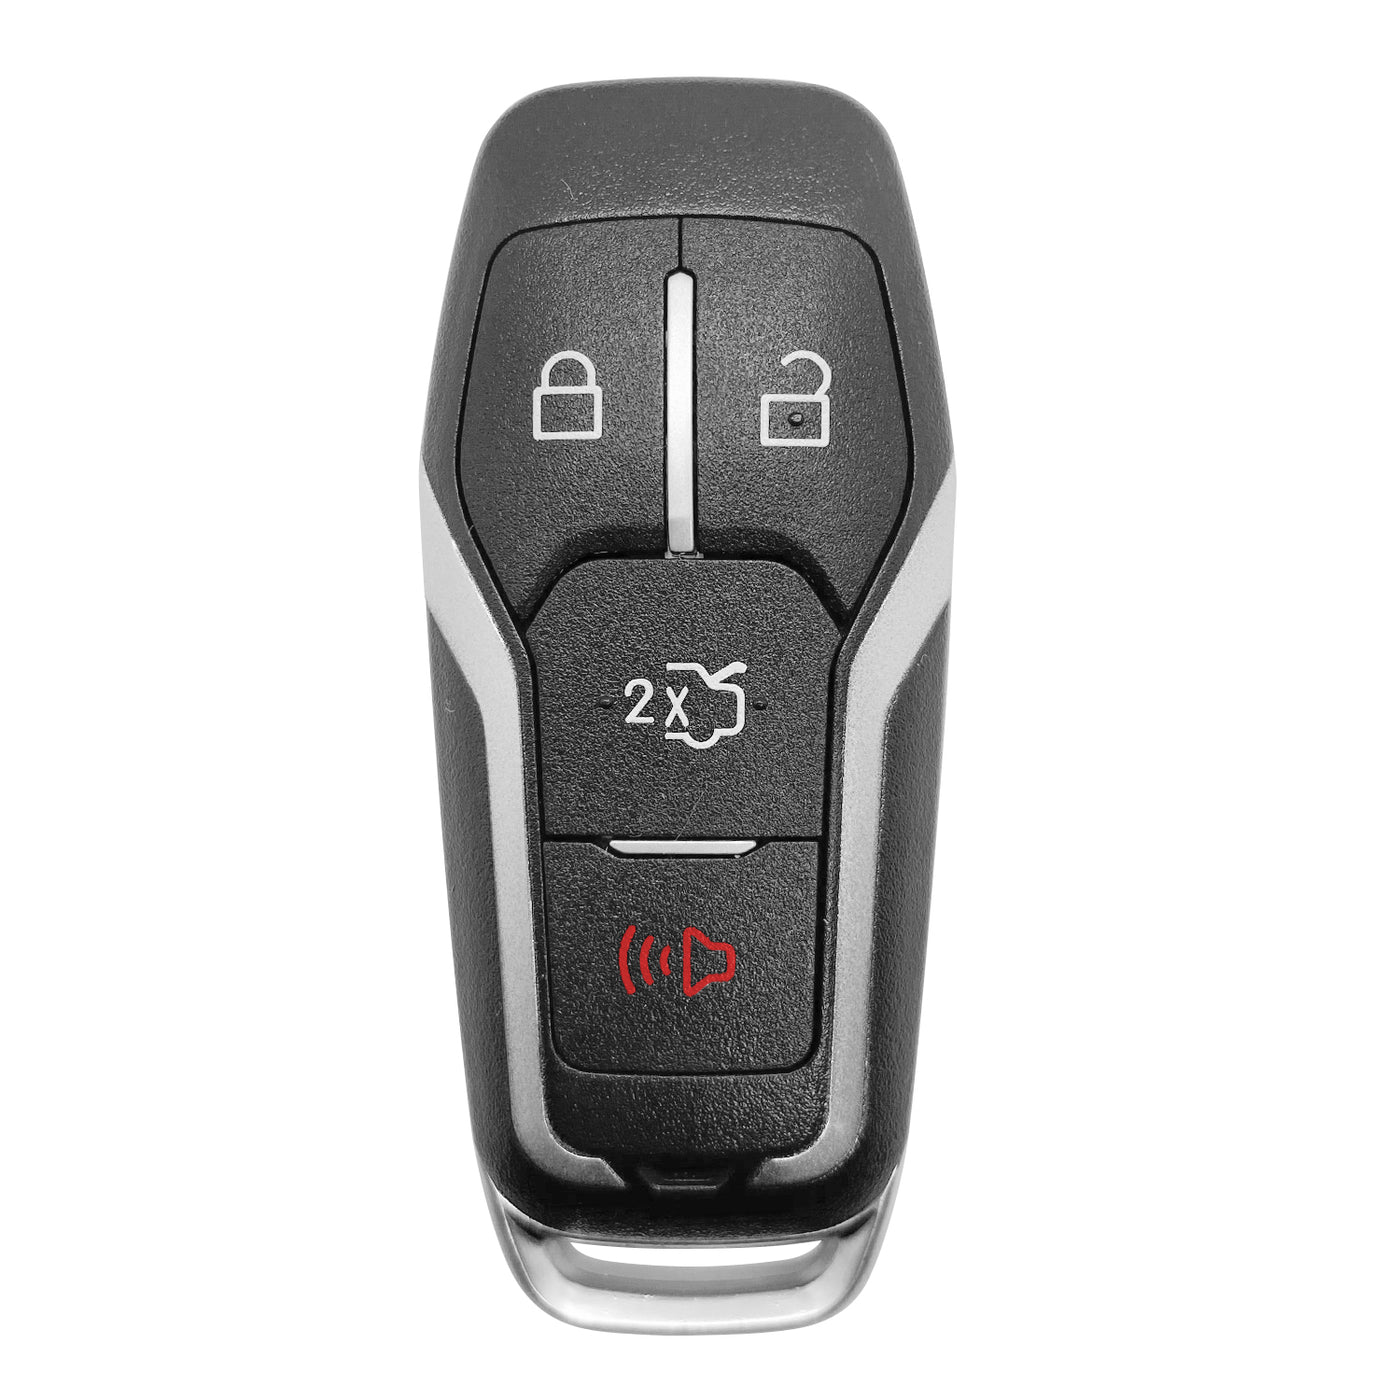 Ford Smart Remote Key M3N5WY8609 164-R7995 5 Button 4D63